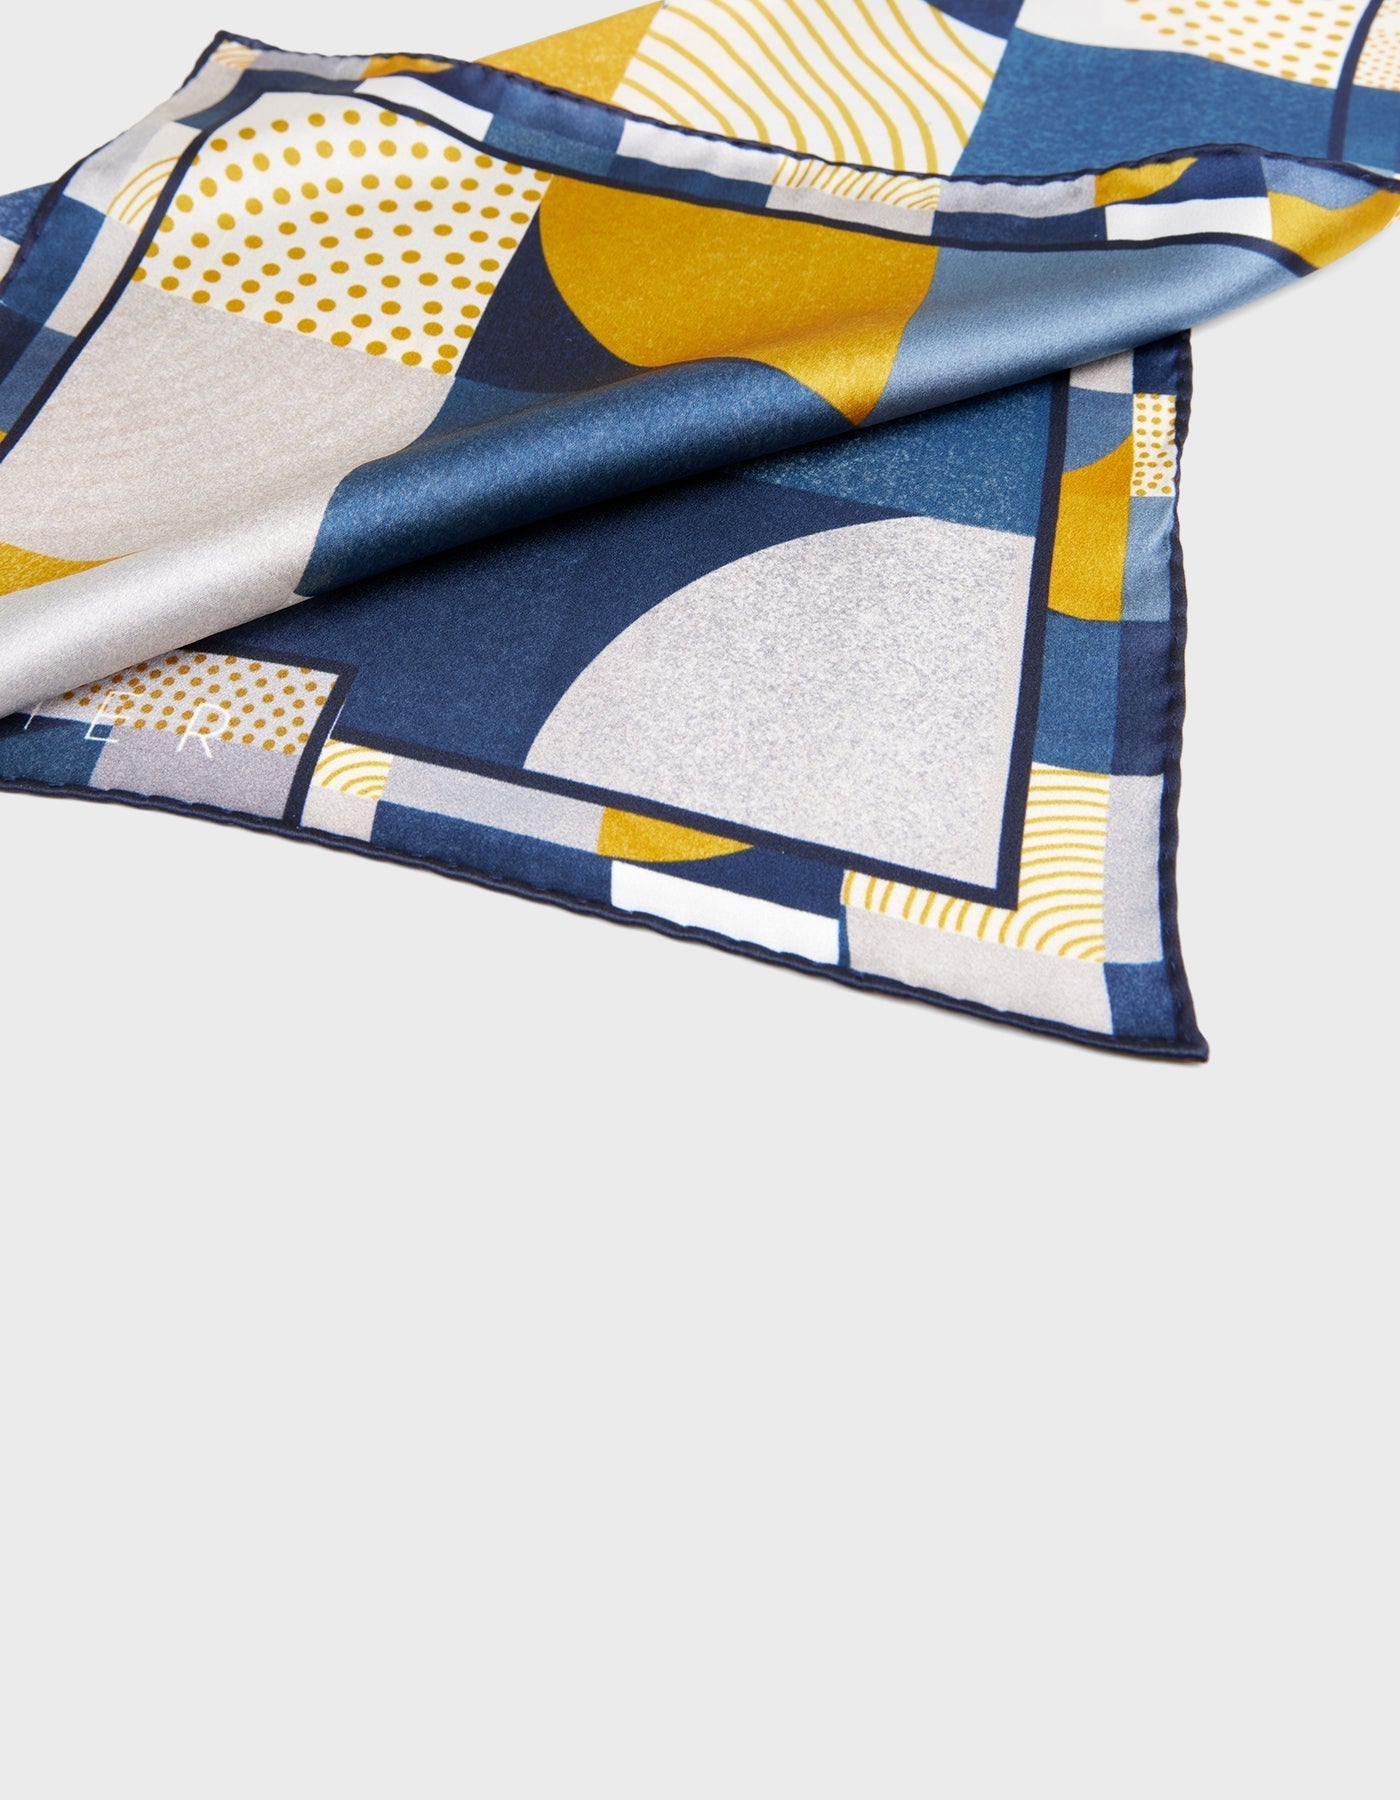 HiVa Atelier | HiVa Silk Scarf 50 X 50 CM Geometric Trickery - Navy & Mustard | Beautiful and Versatile